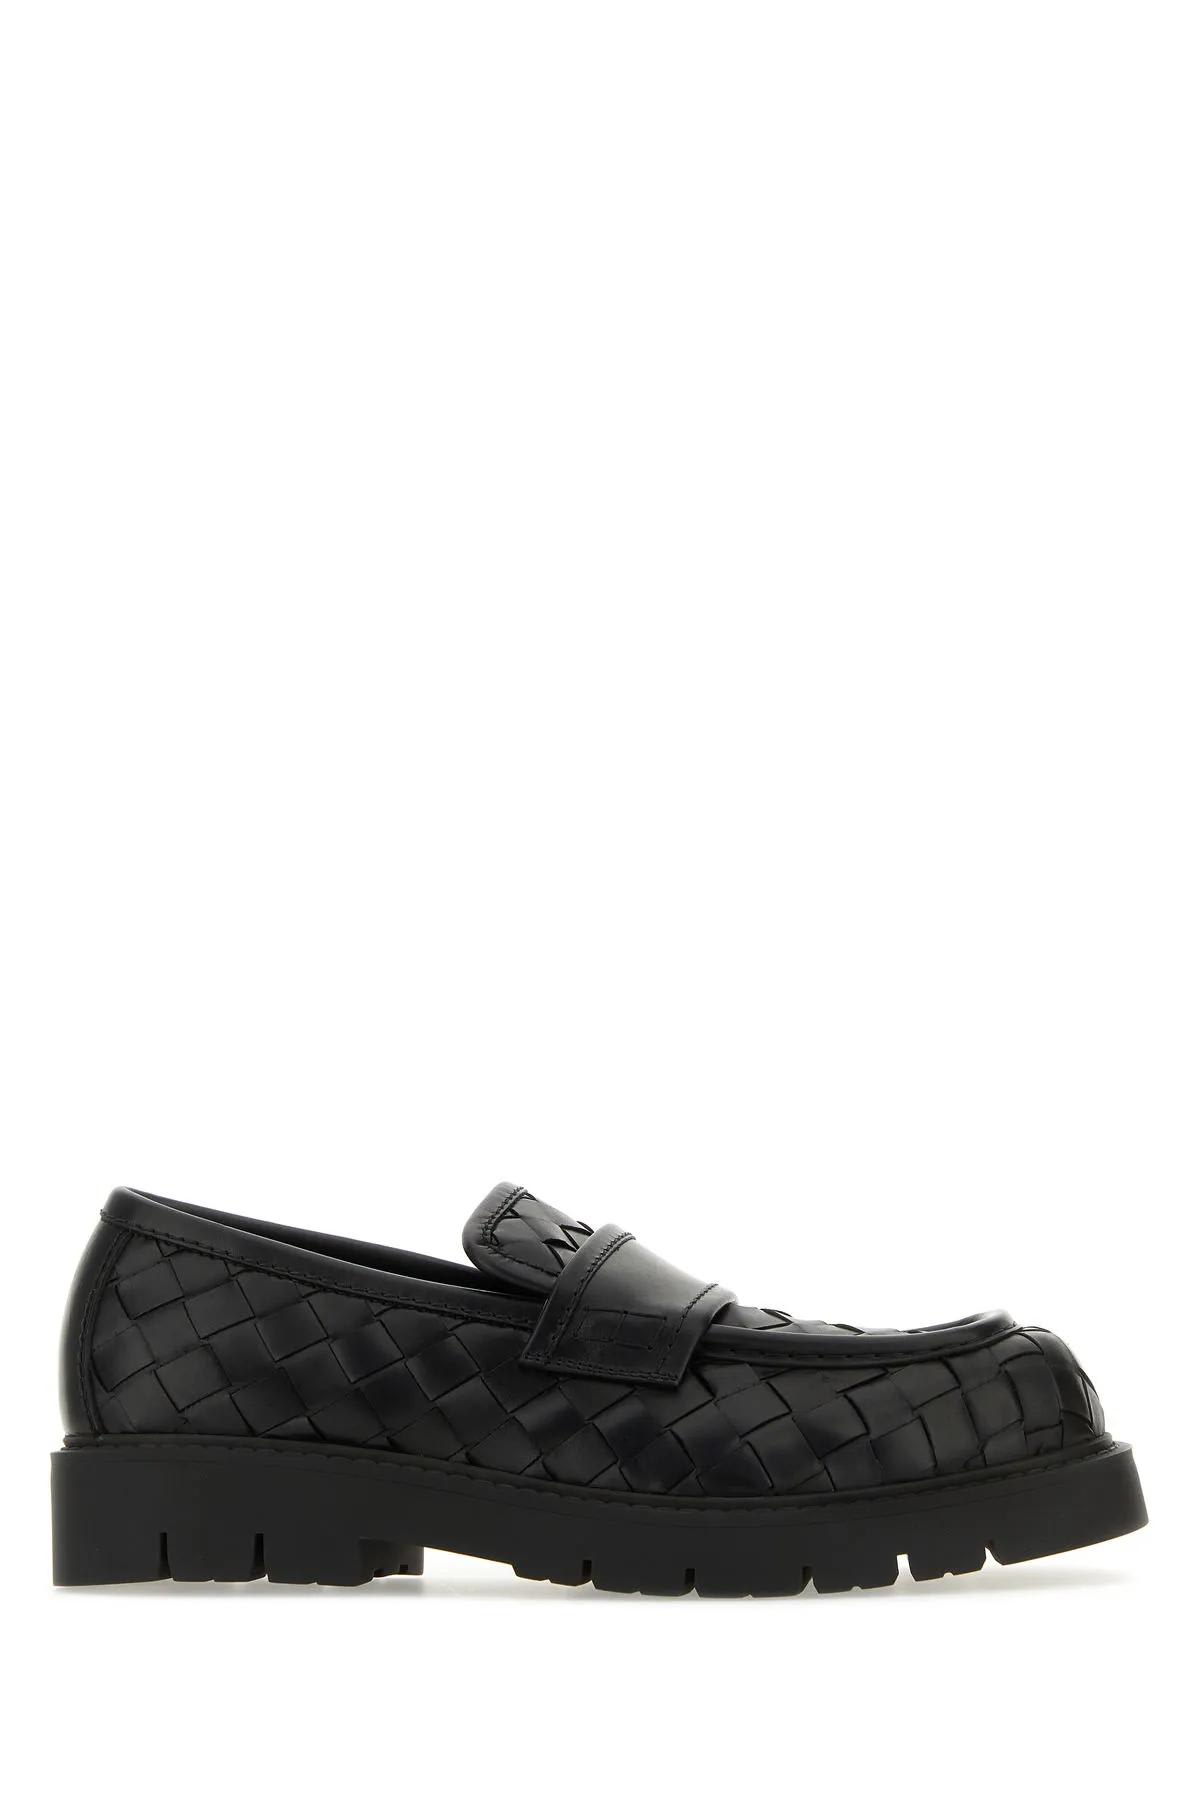 Shop Bottega Veneta Black Leather Loafers